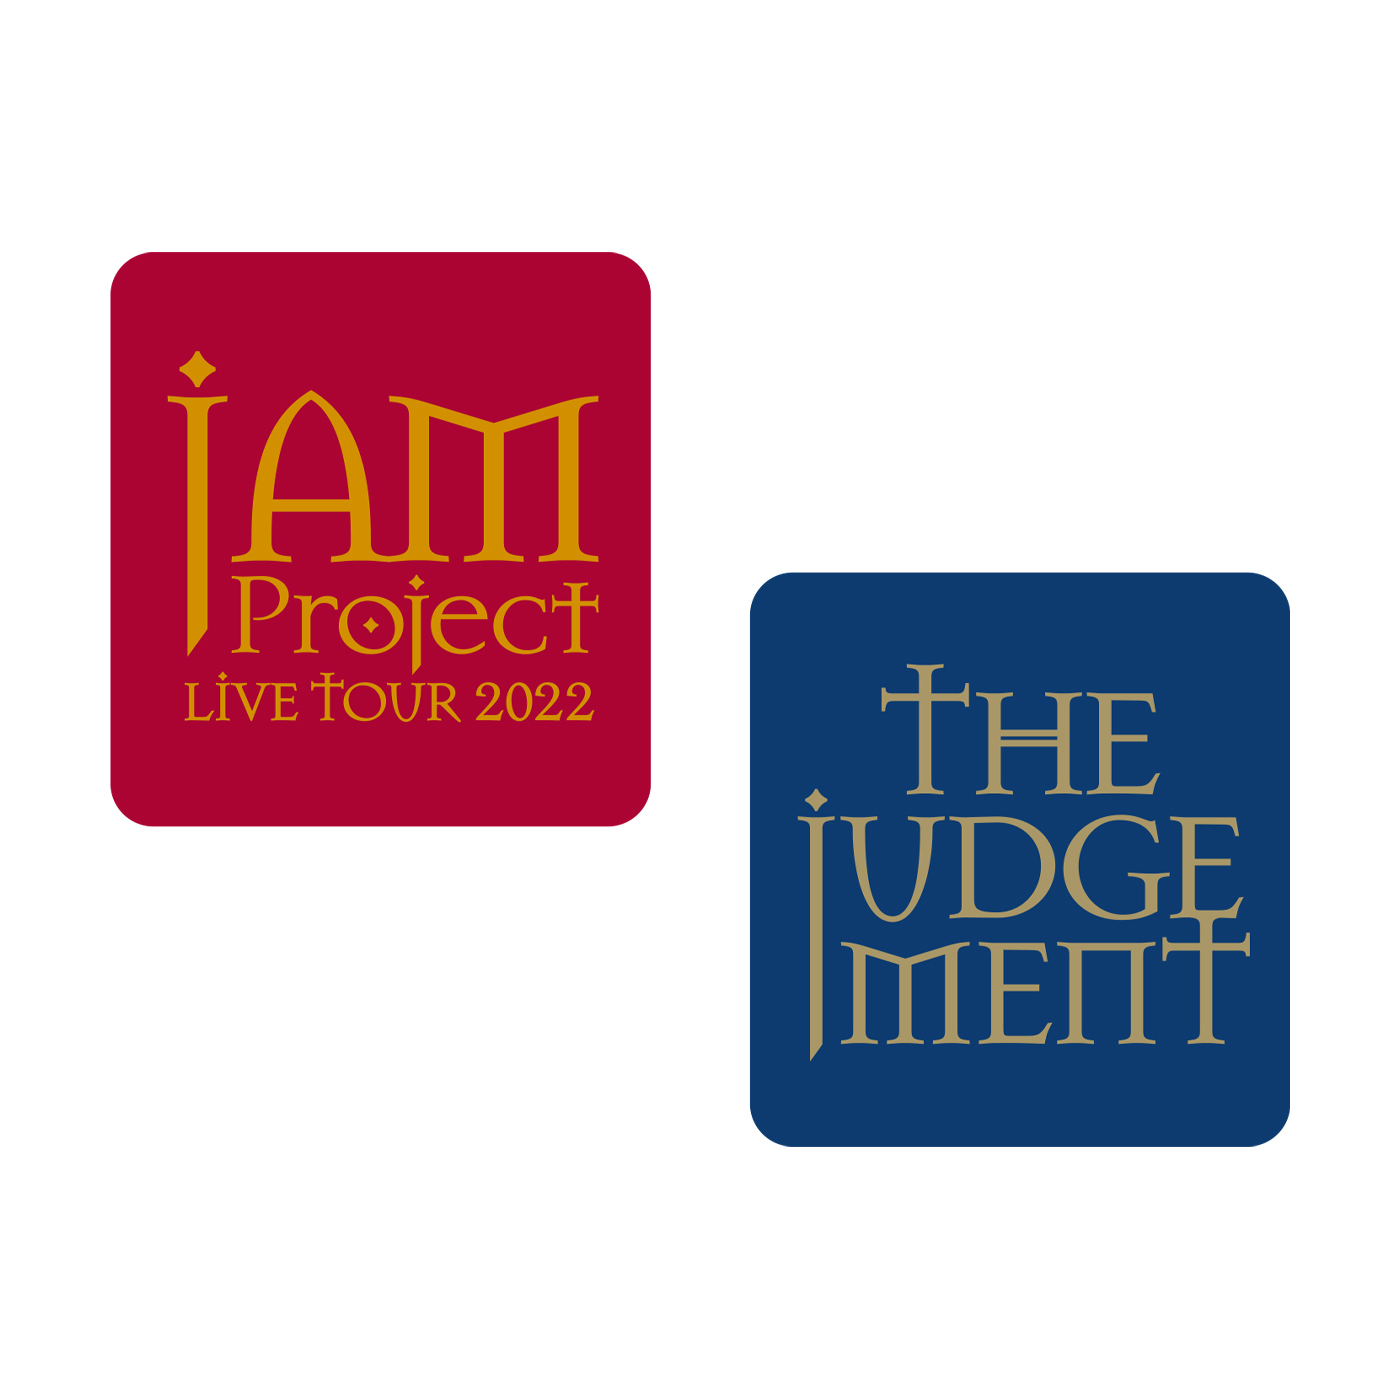 THE JUDGEMENT リストバンドセット